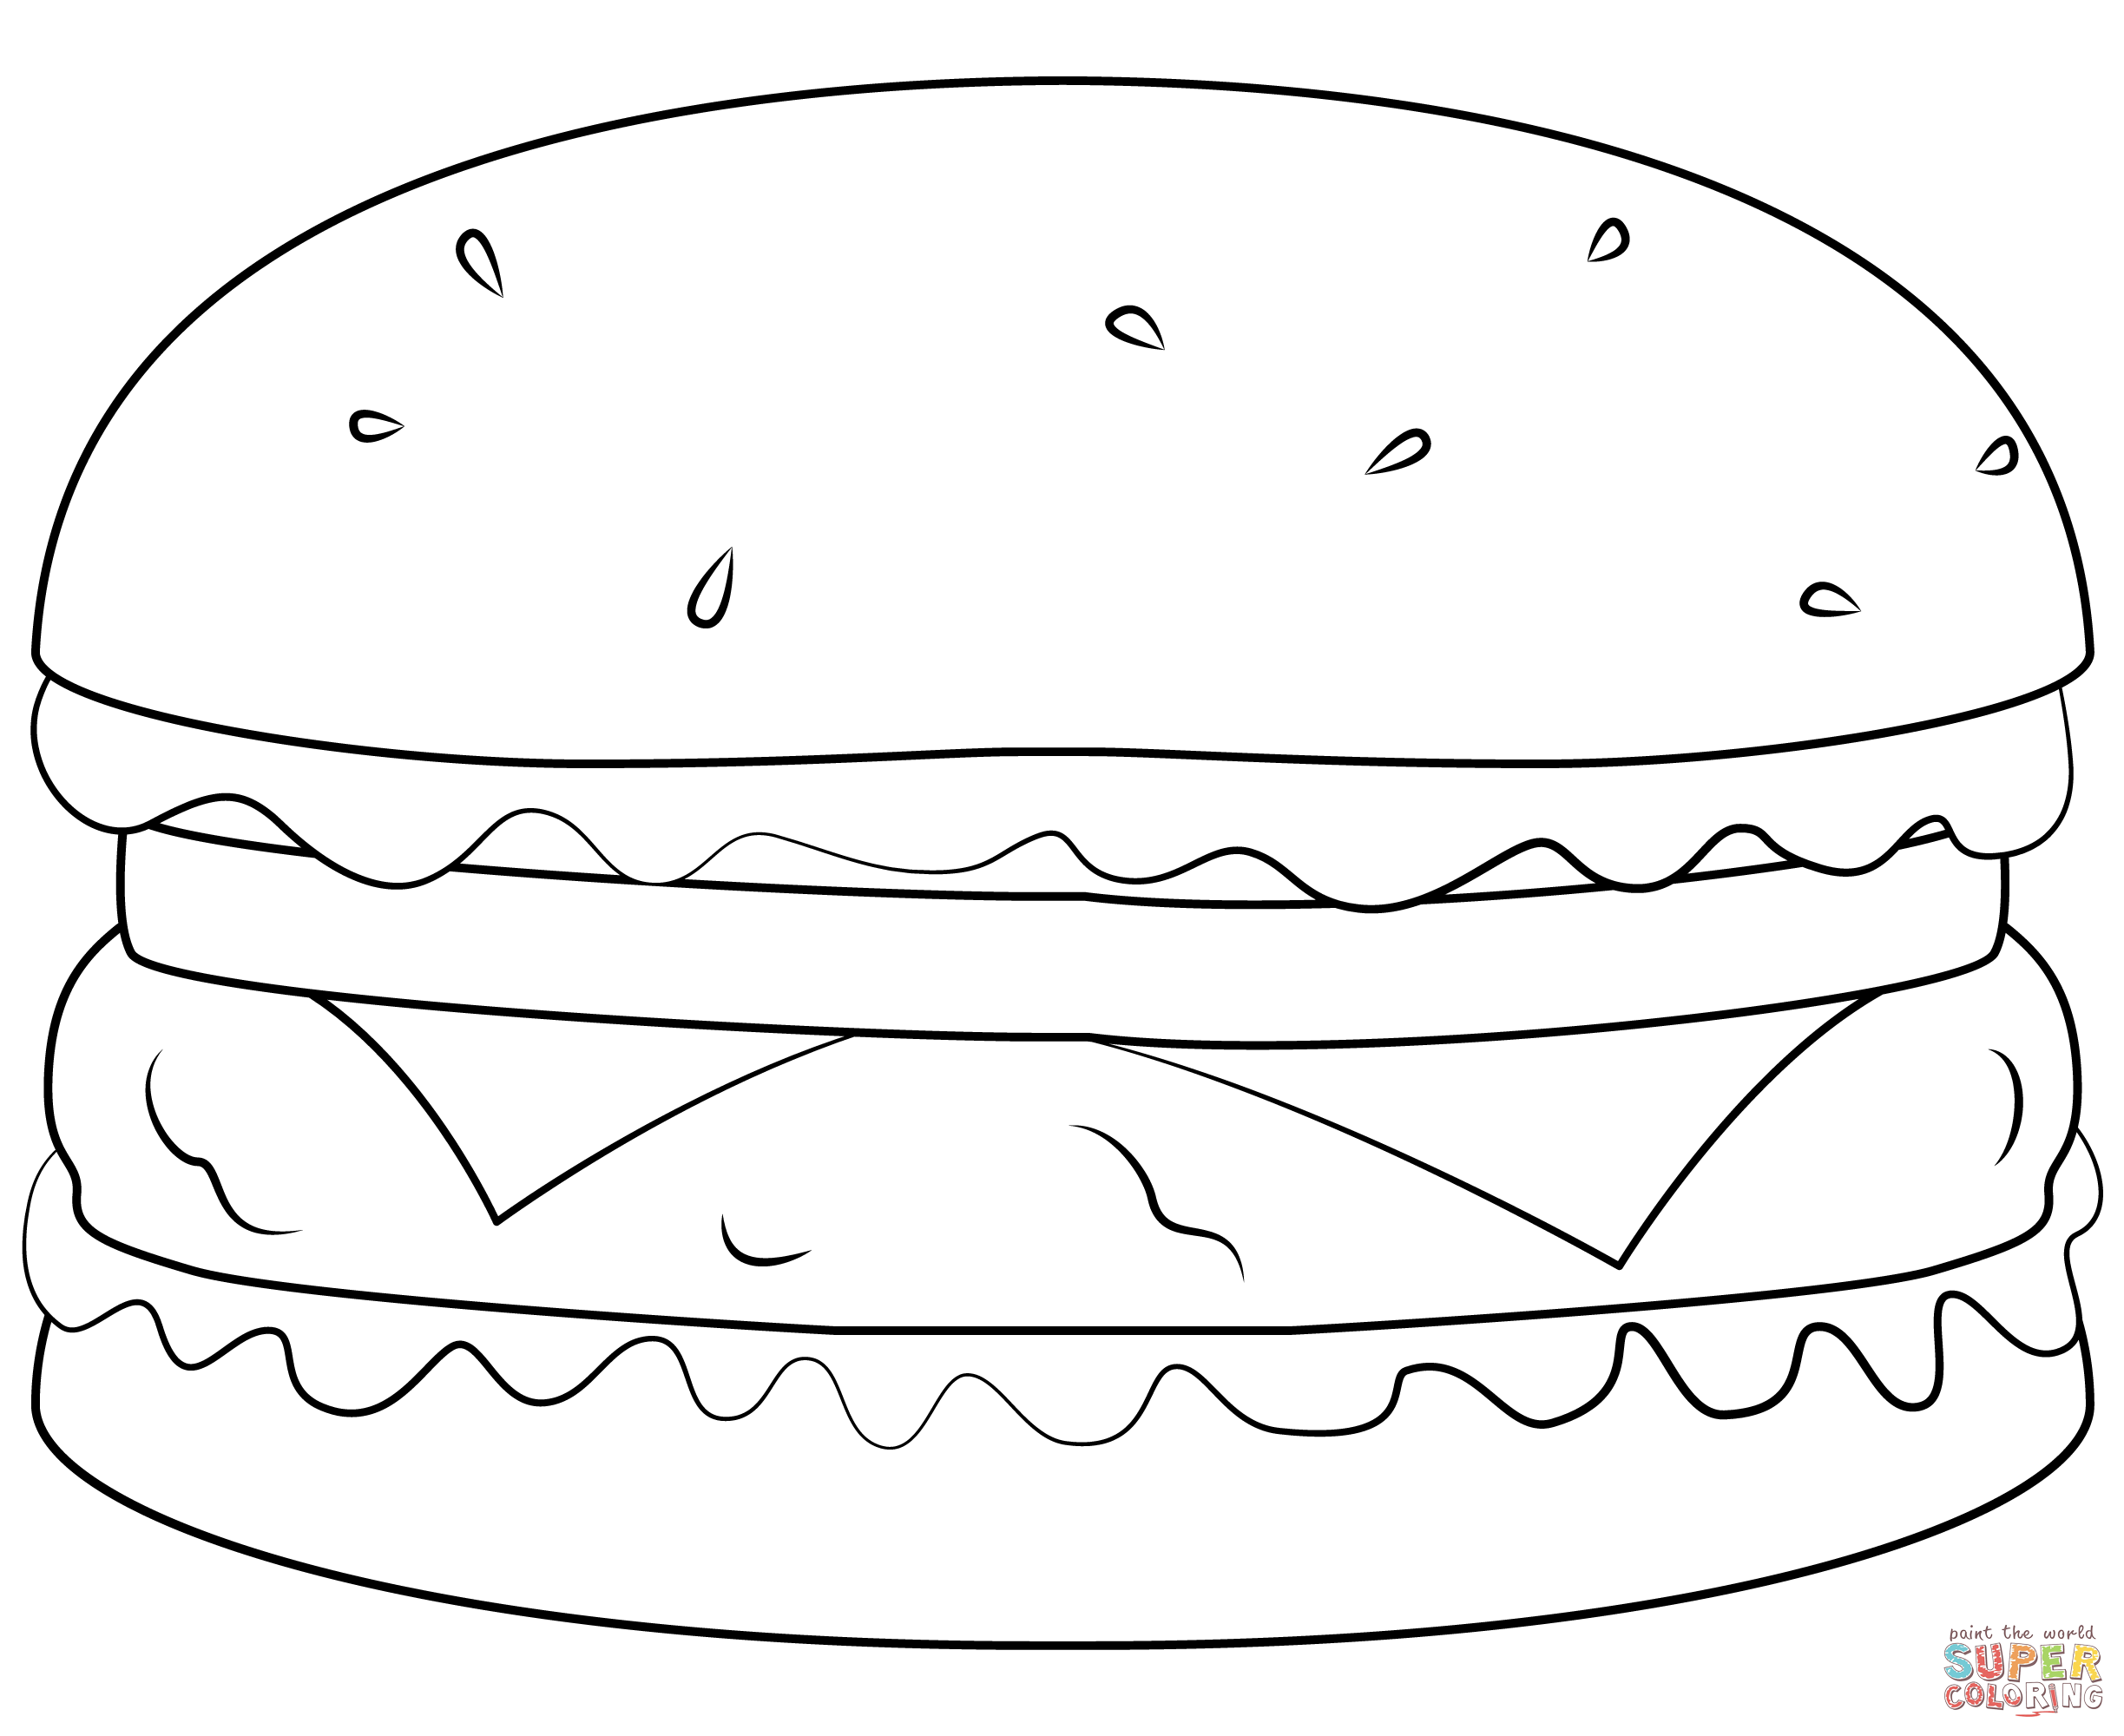 Hamburger coloring page free printable coloring pages